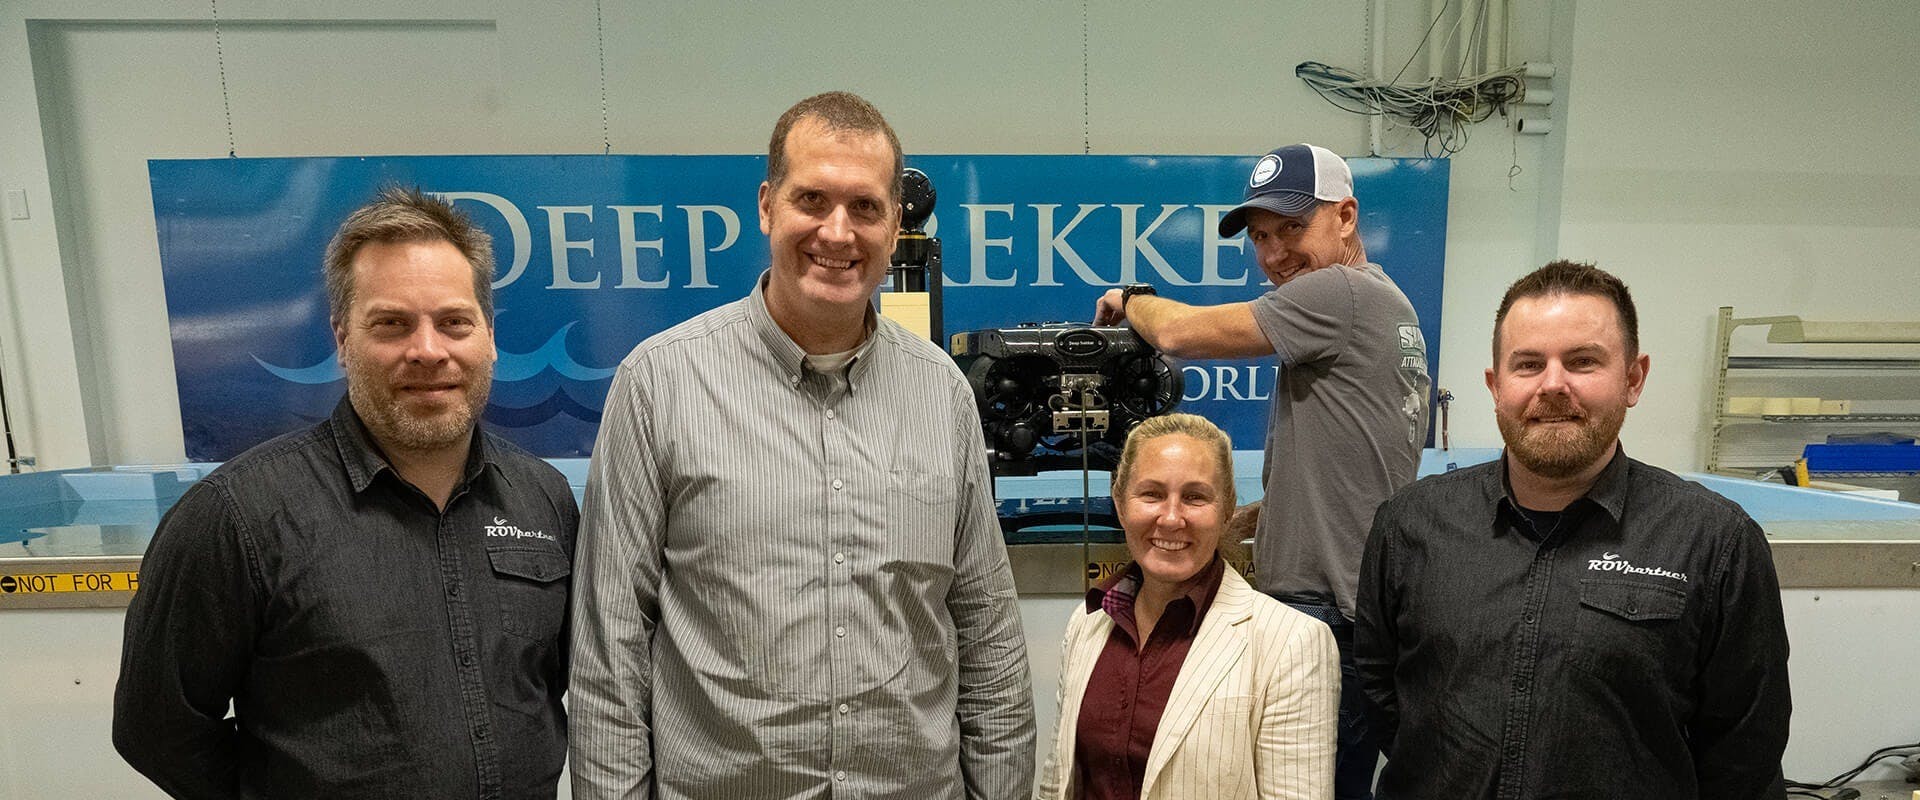 Discover Deep Trekker's Reseller Program and Underwater ROVs